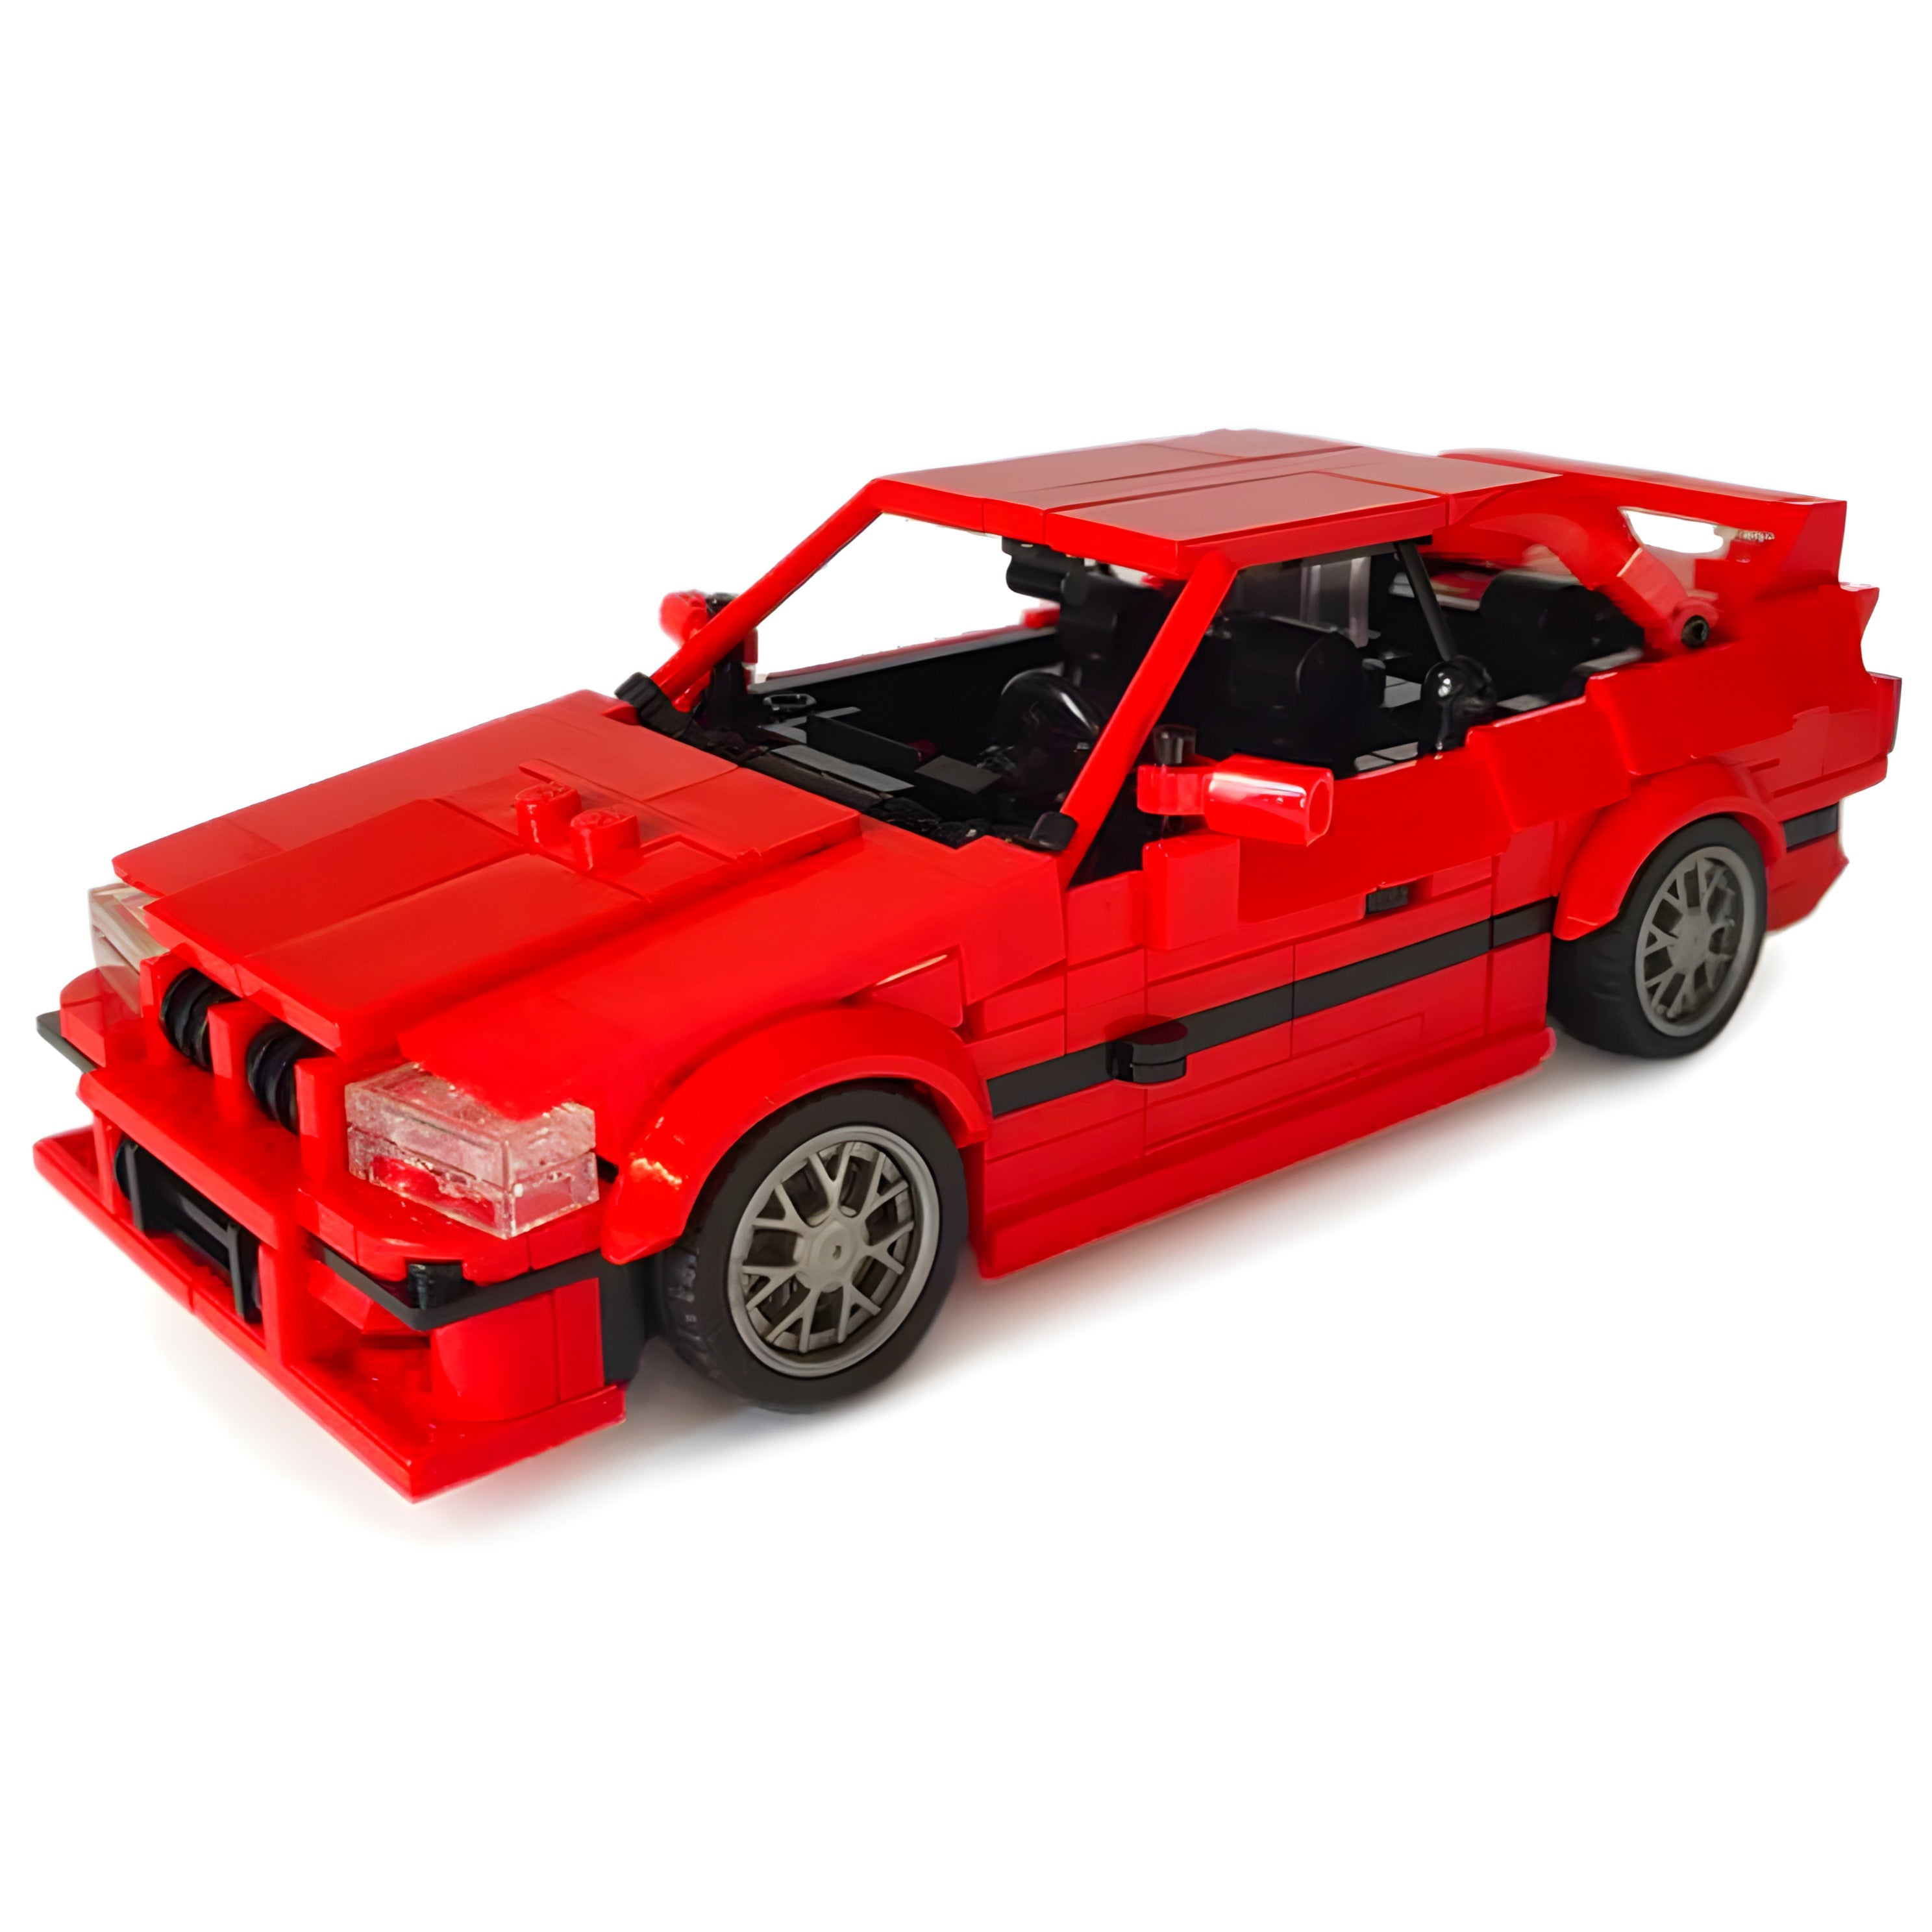 BMW M3 E36 | s set, compatible with Lego